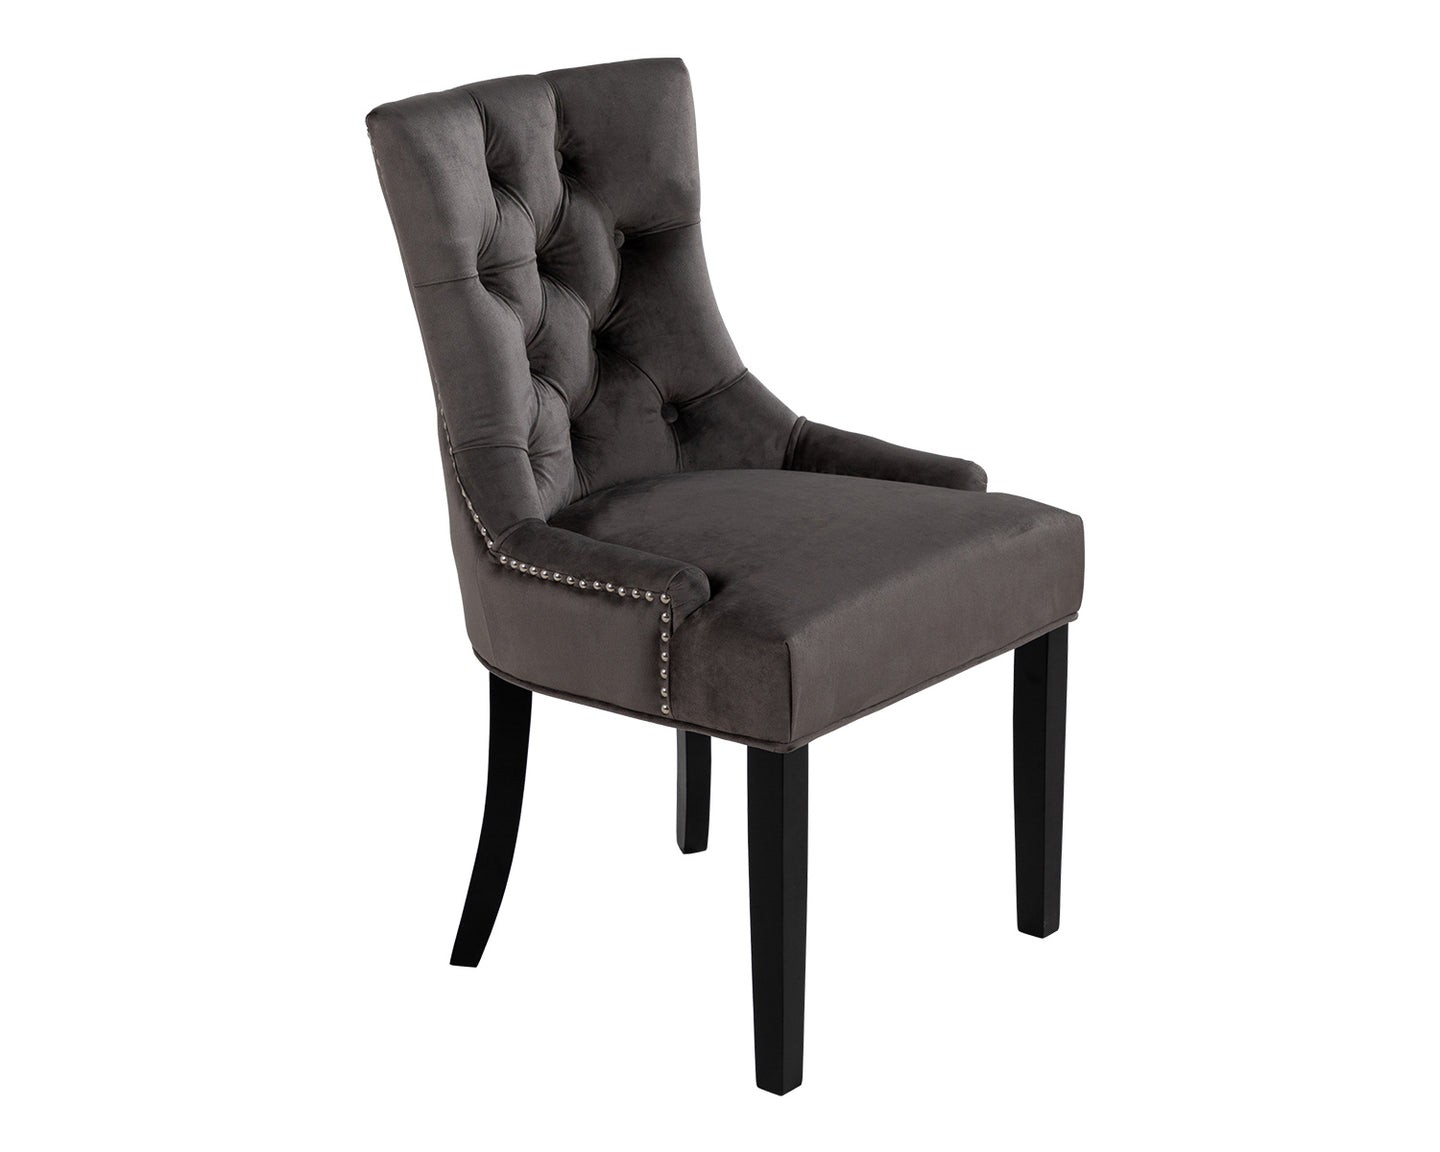 Verona Dining Chair in Grey Velvet with Chrome Knocker and Black Legs